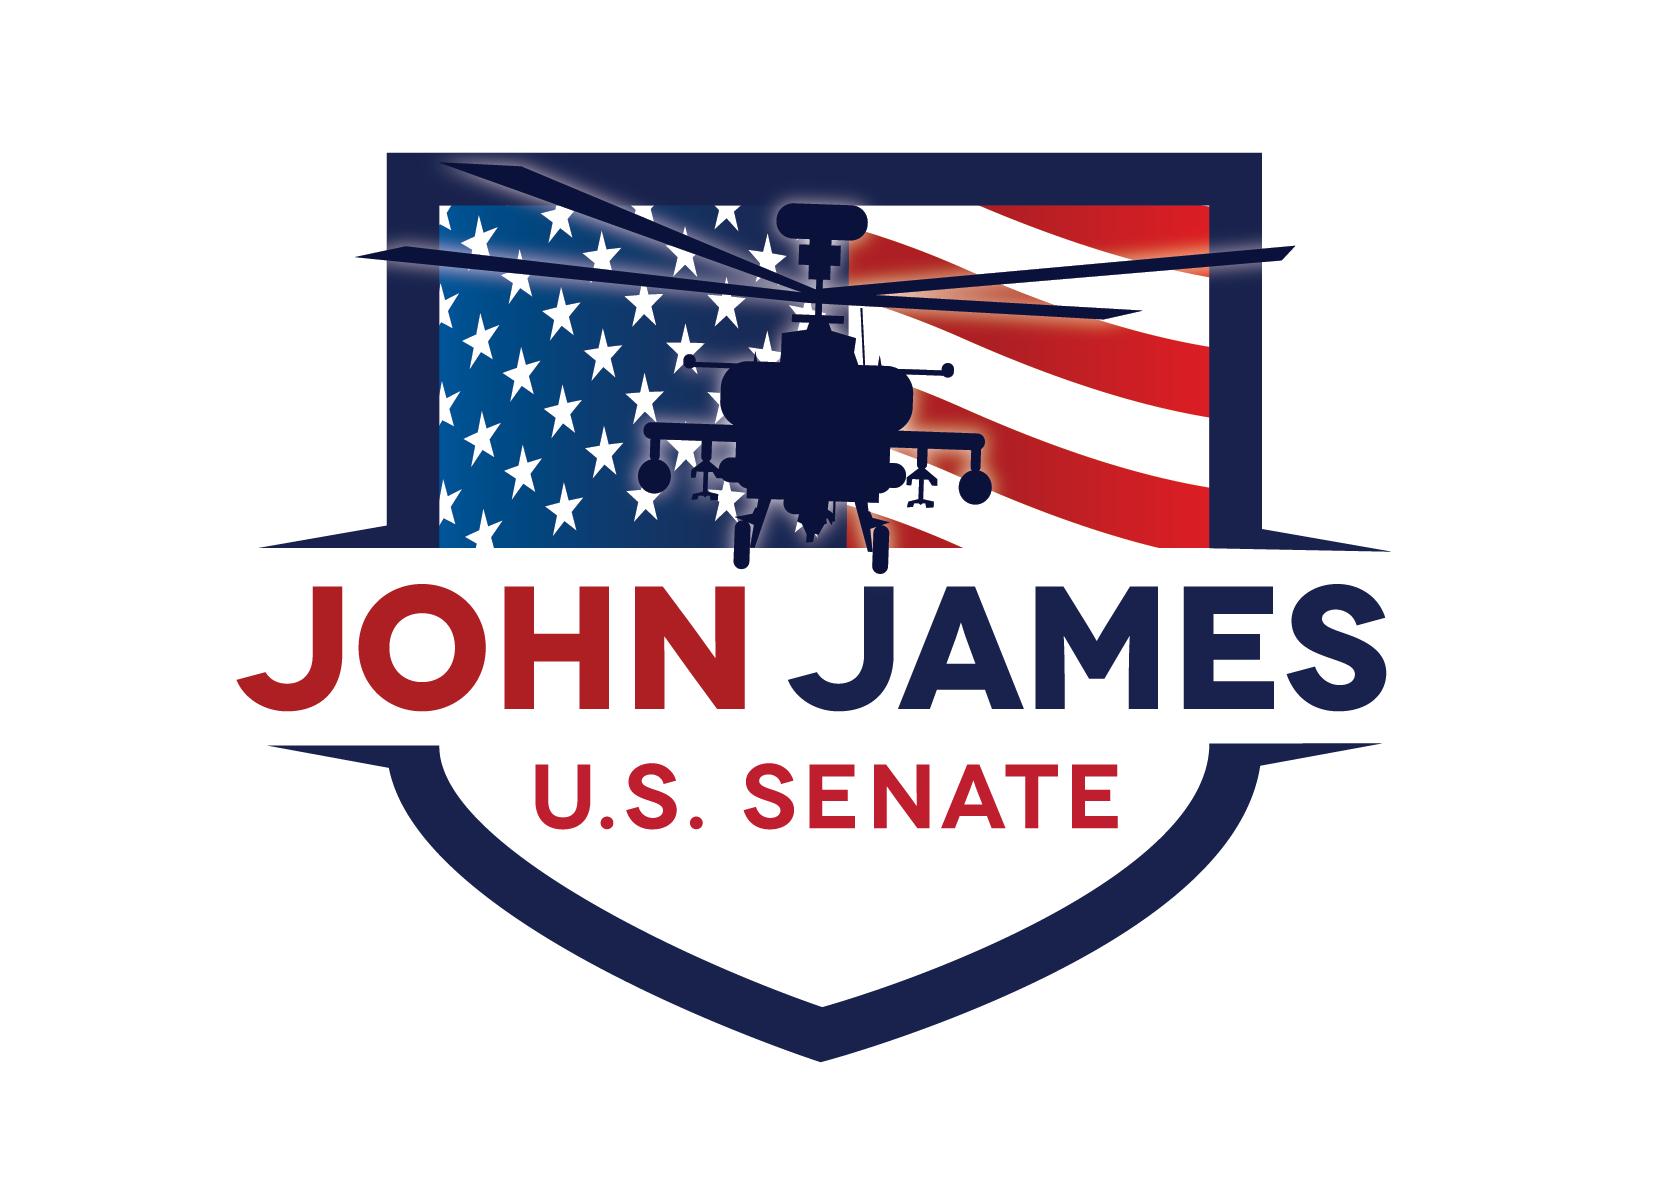 John James for Senate